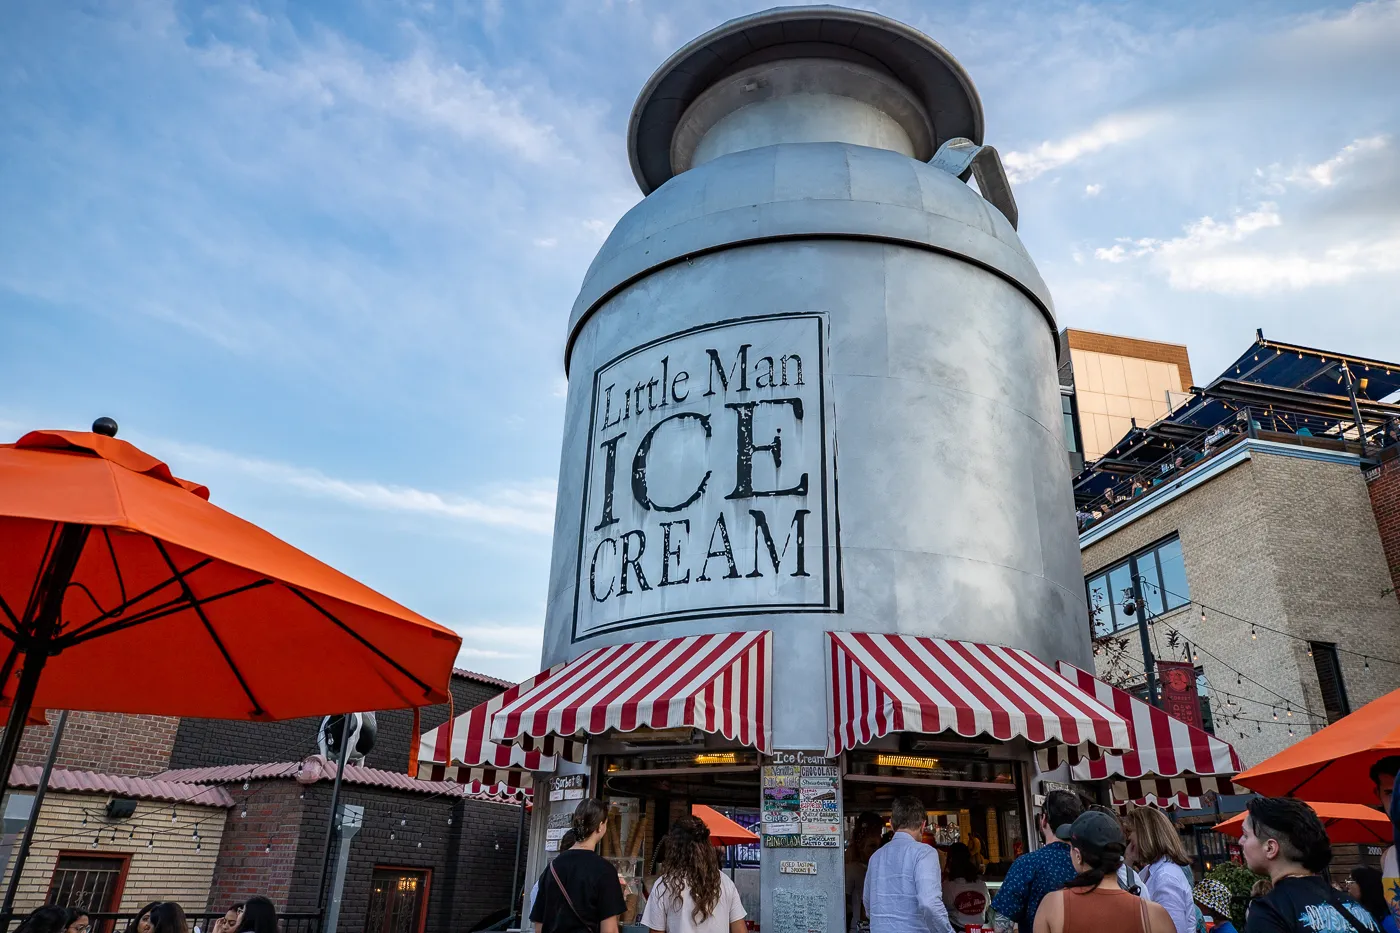 Little Man Ice Cream - Giant Milk Can Ice Cream Shop in Denver, Colorado roadside attraction